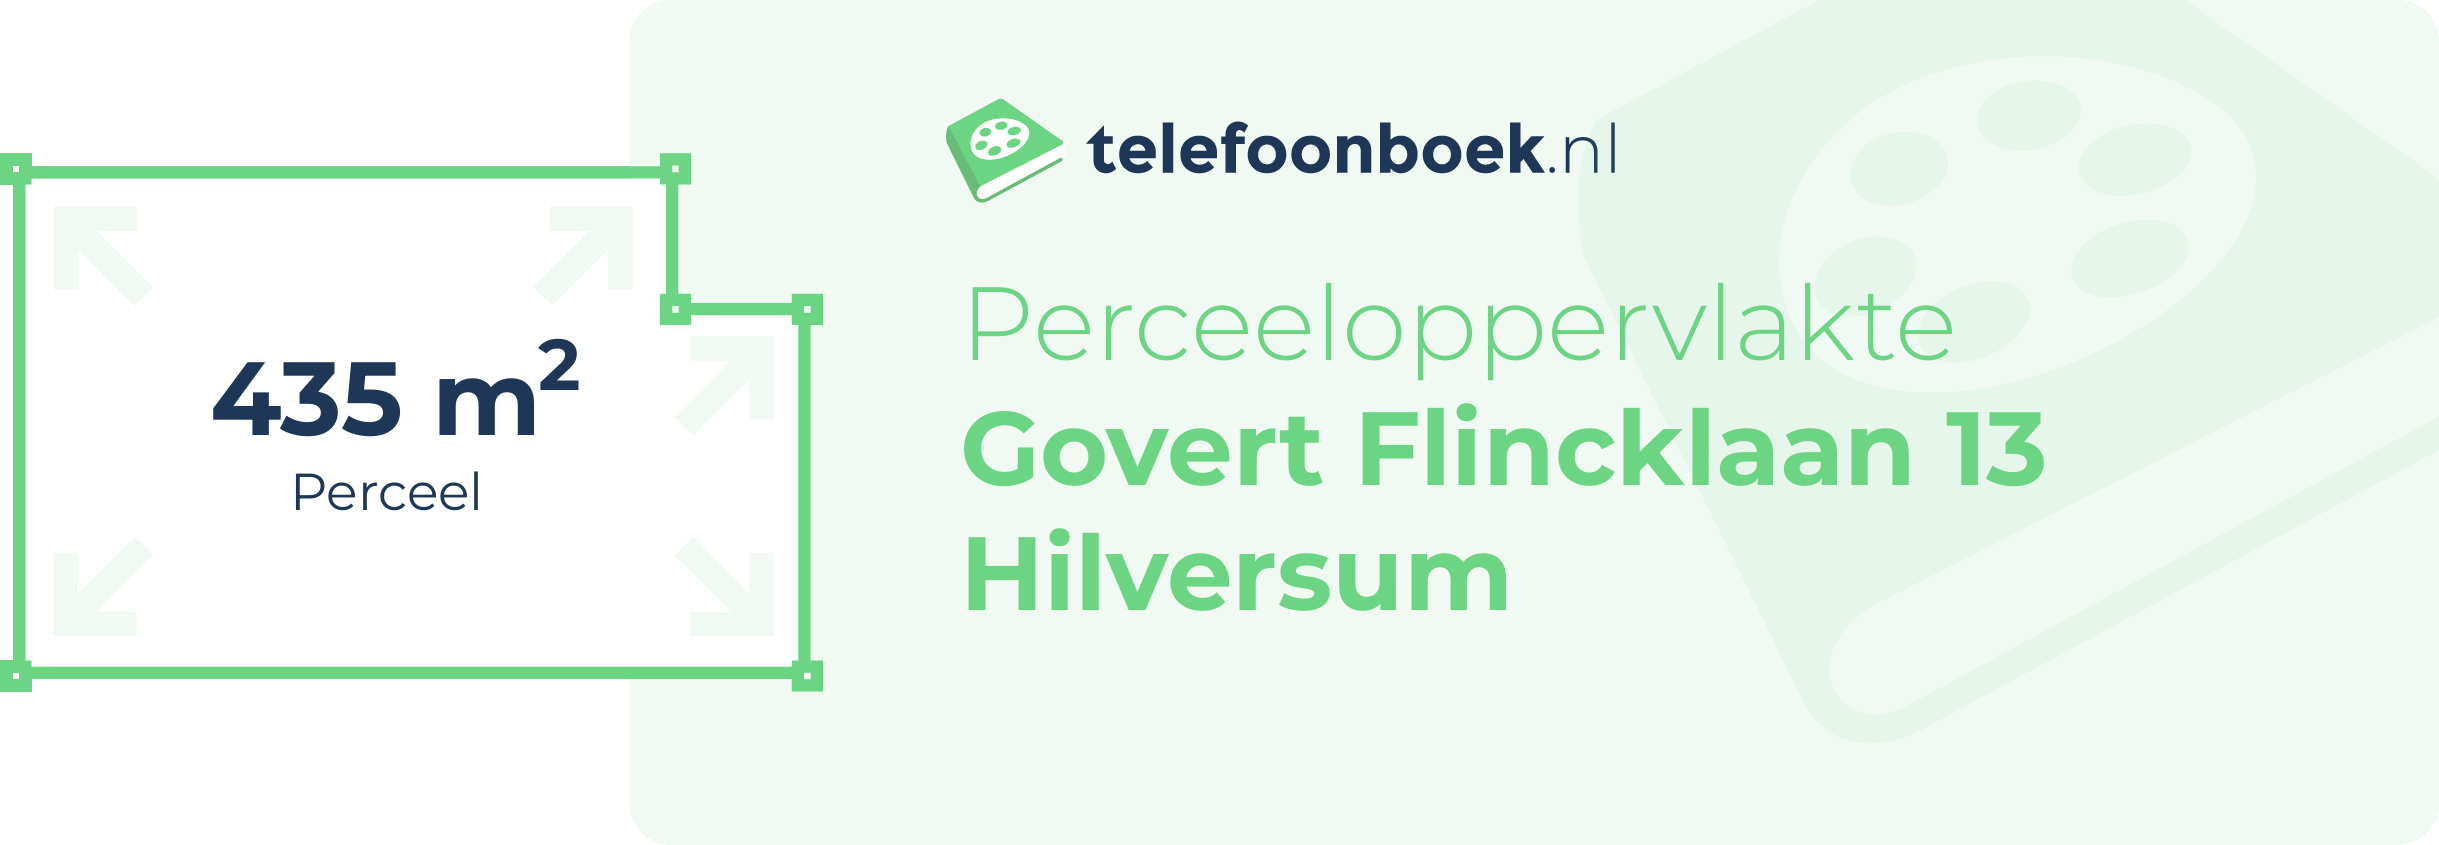 Perceeloppervlakte Govert Flincklaan 13 Hilversum